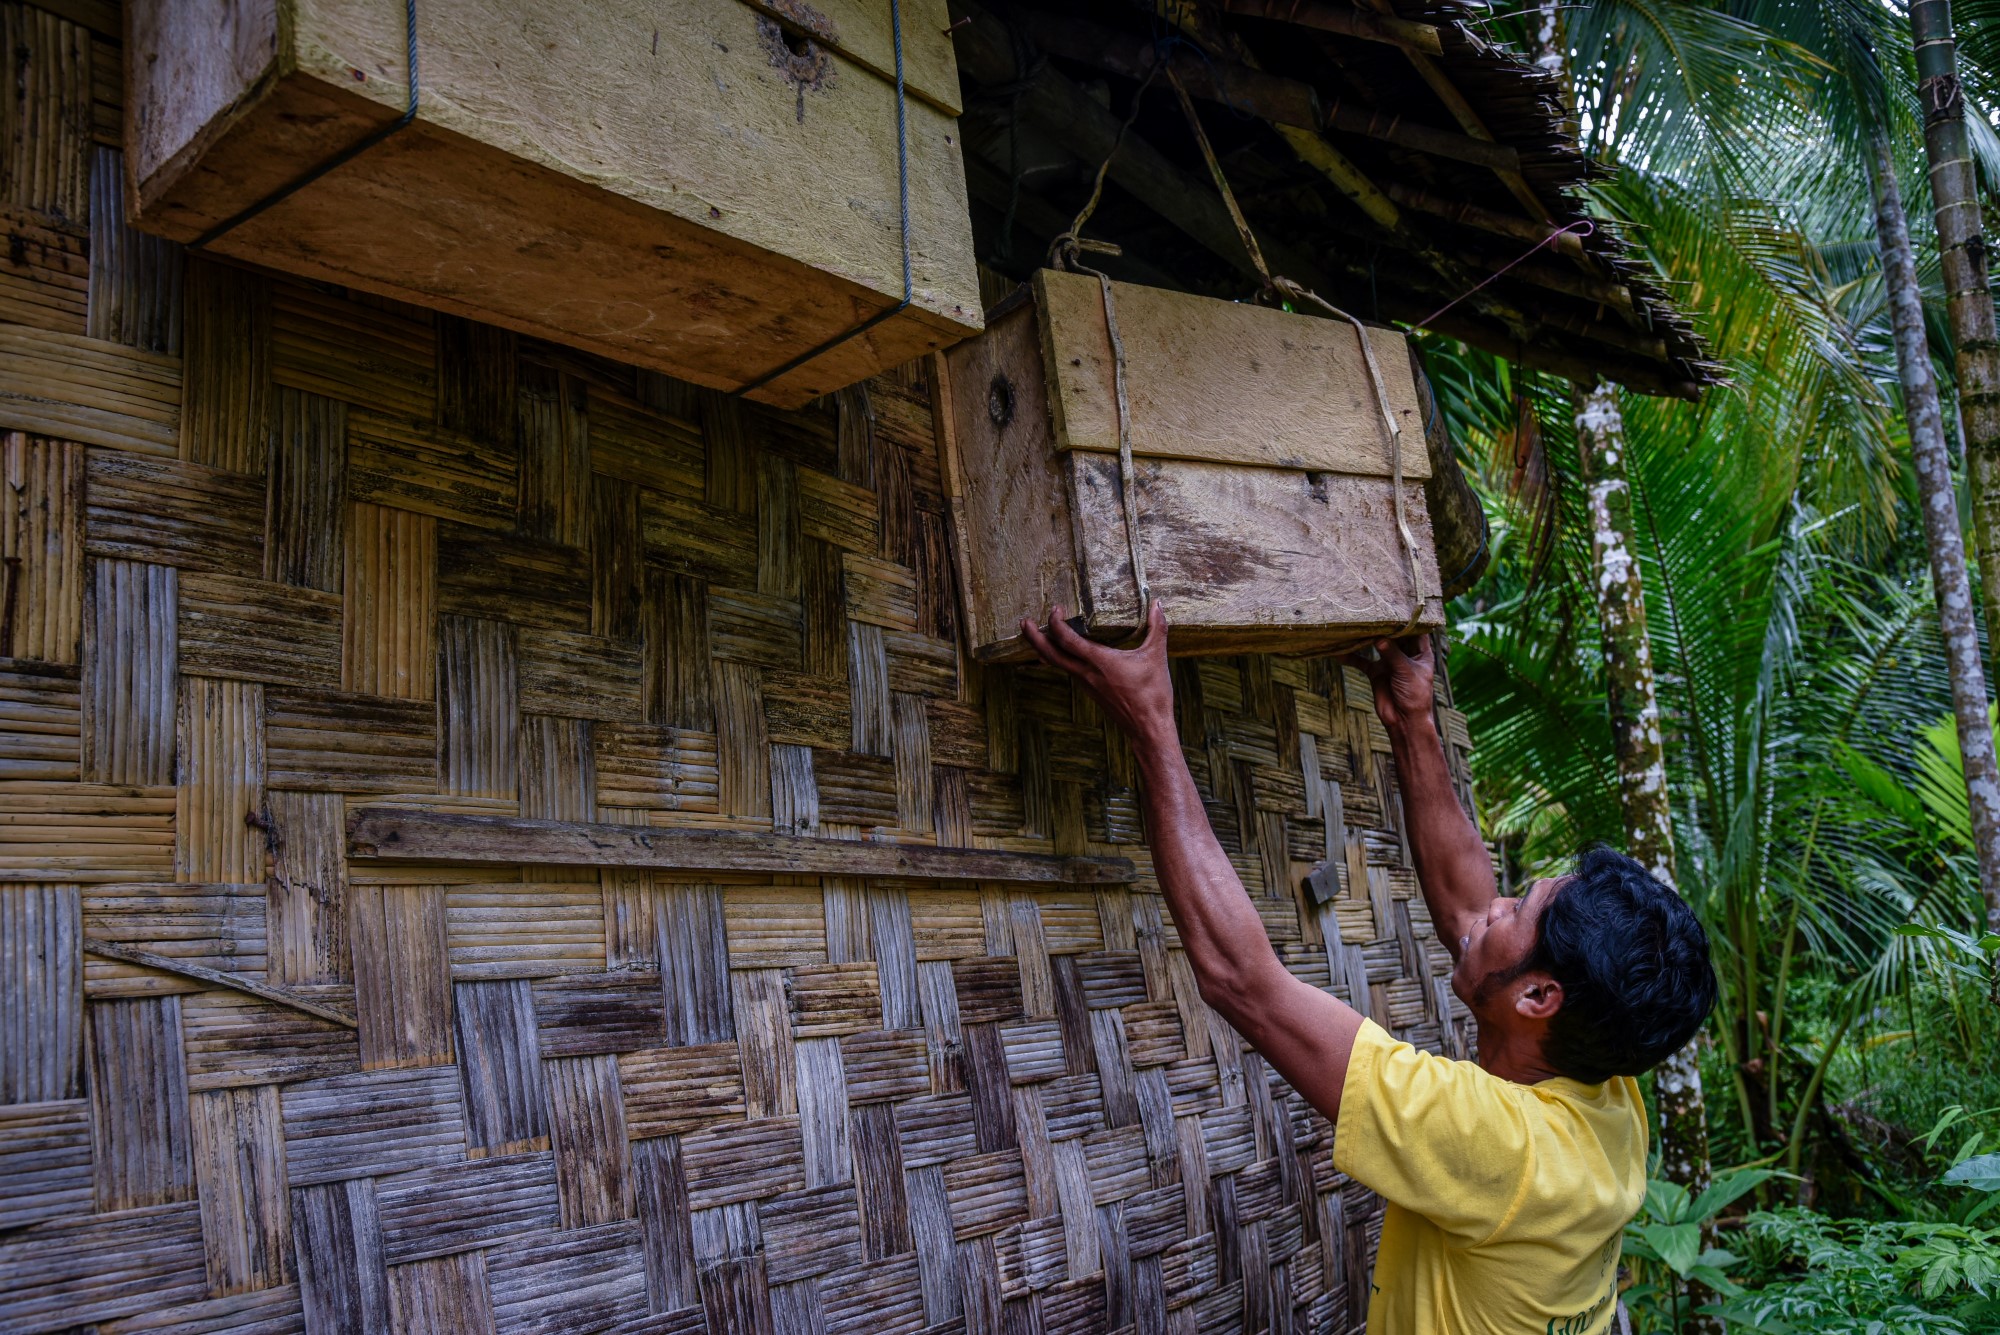 Aung Ko Ko hangs his beehives beneath a roof to keep them dry during rainy season